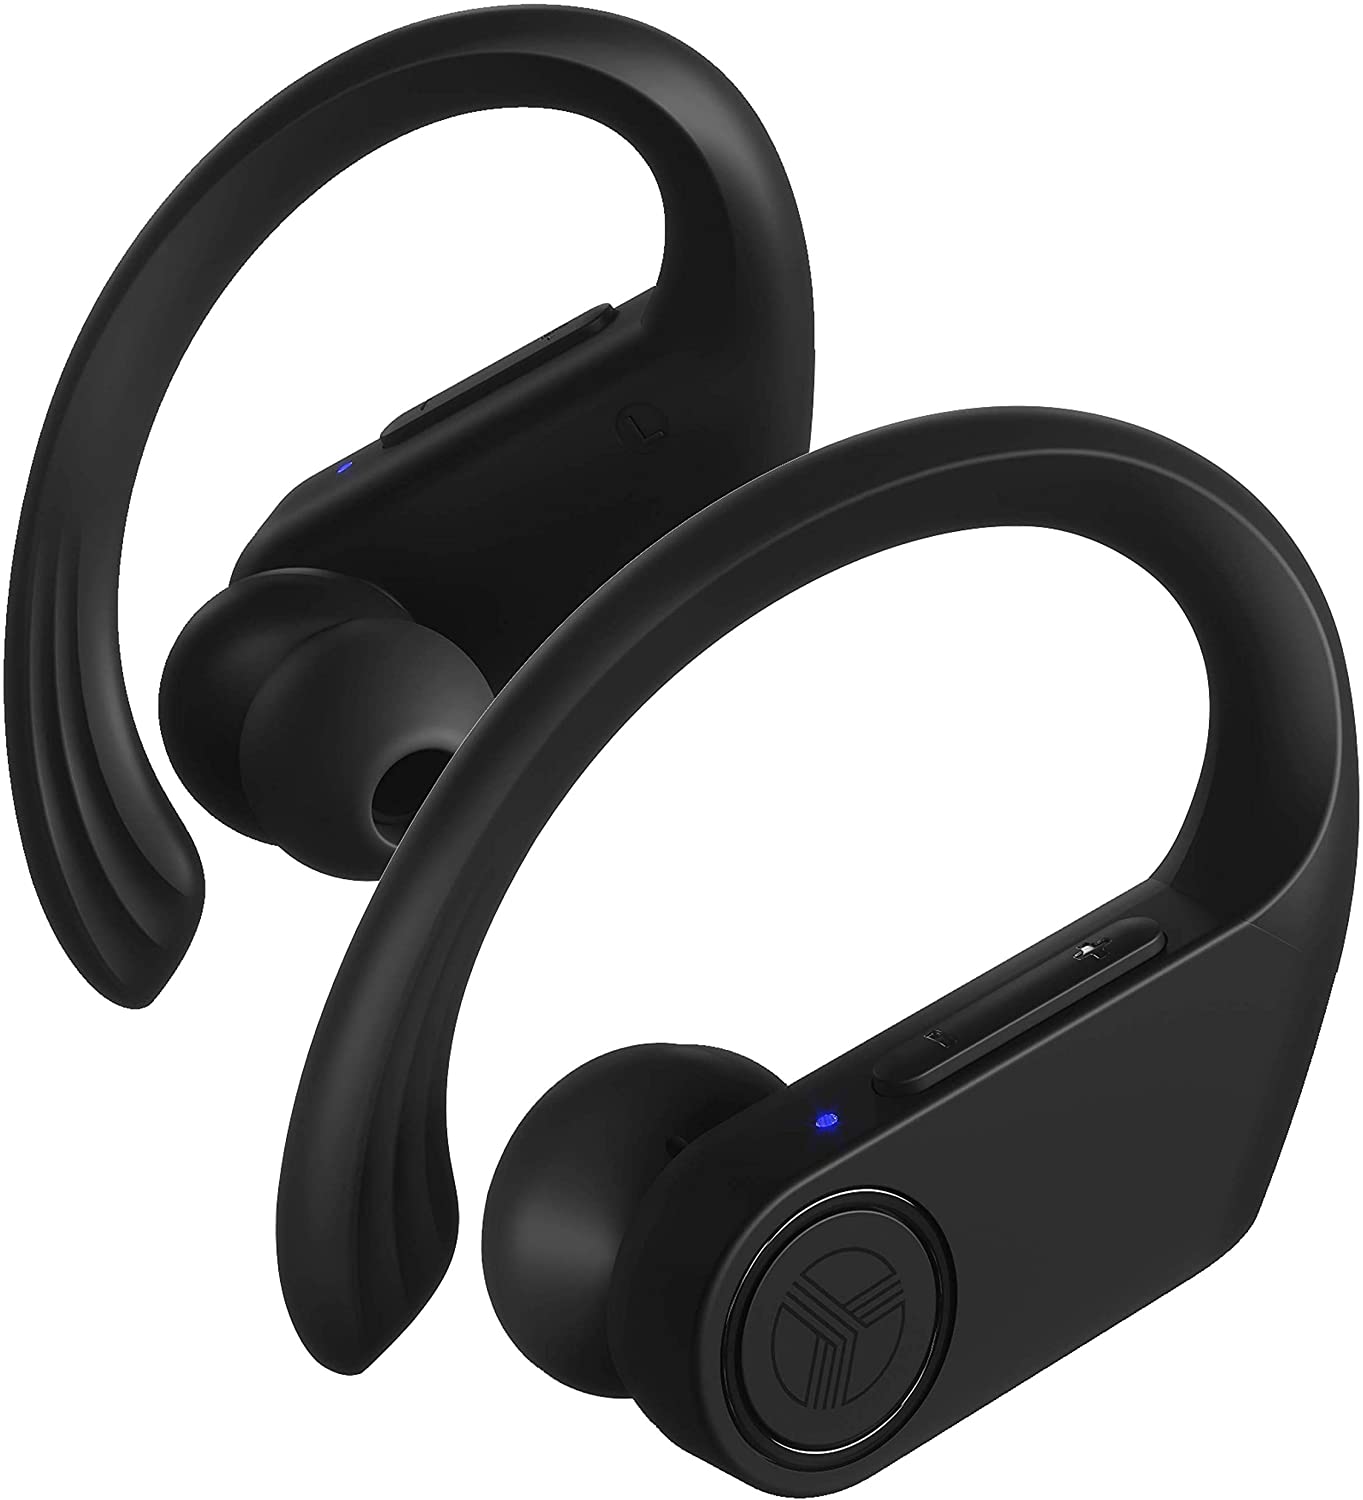 Get an 18% discount on the Treblab X3 Pro true wireless earbuds